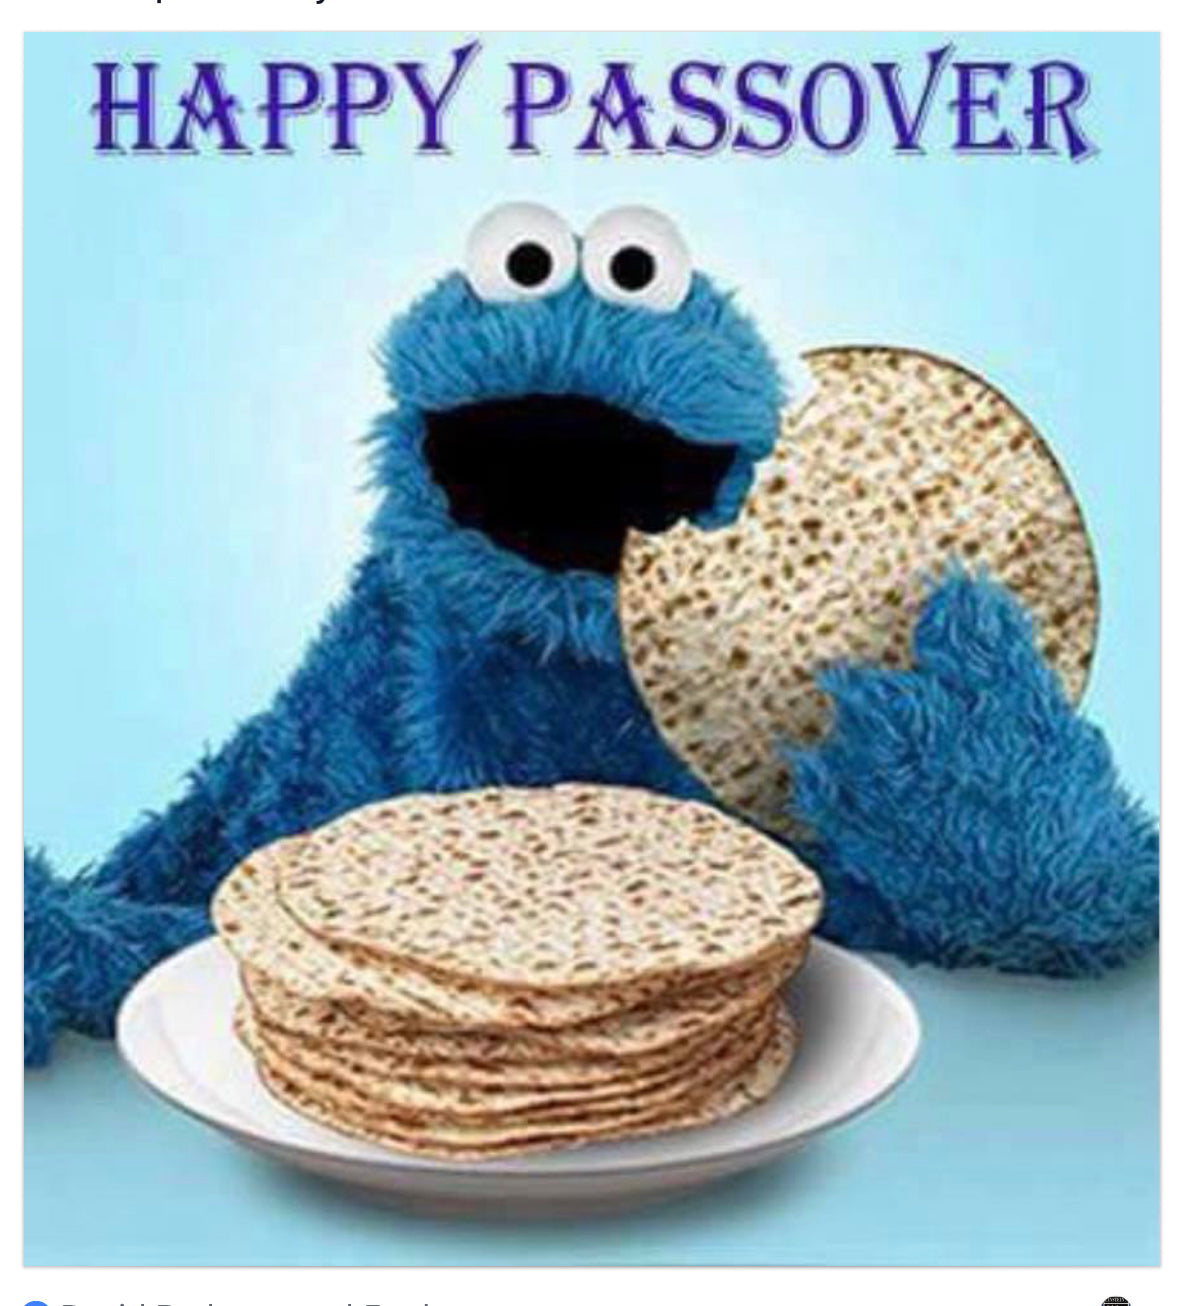 Celebrate Passover